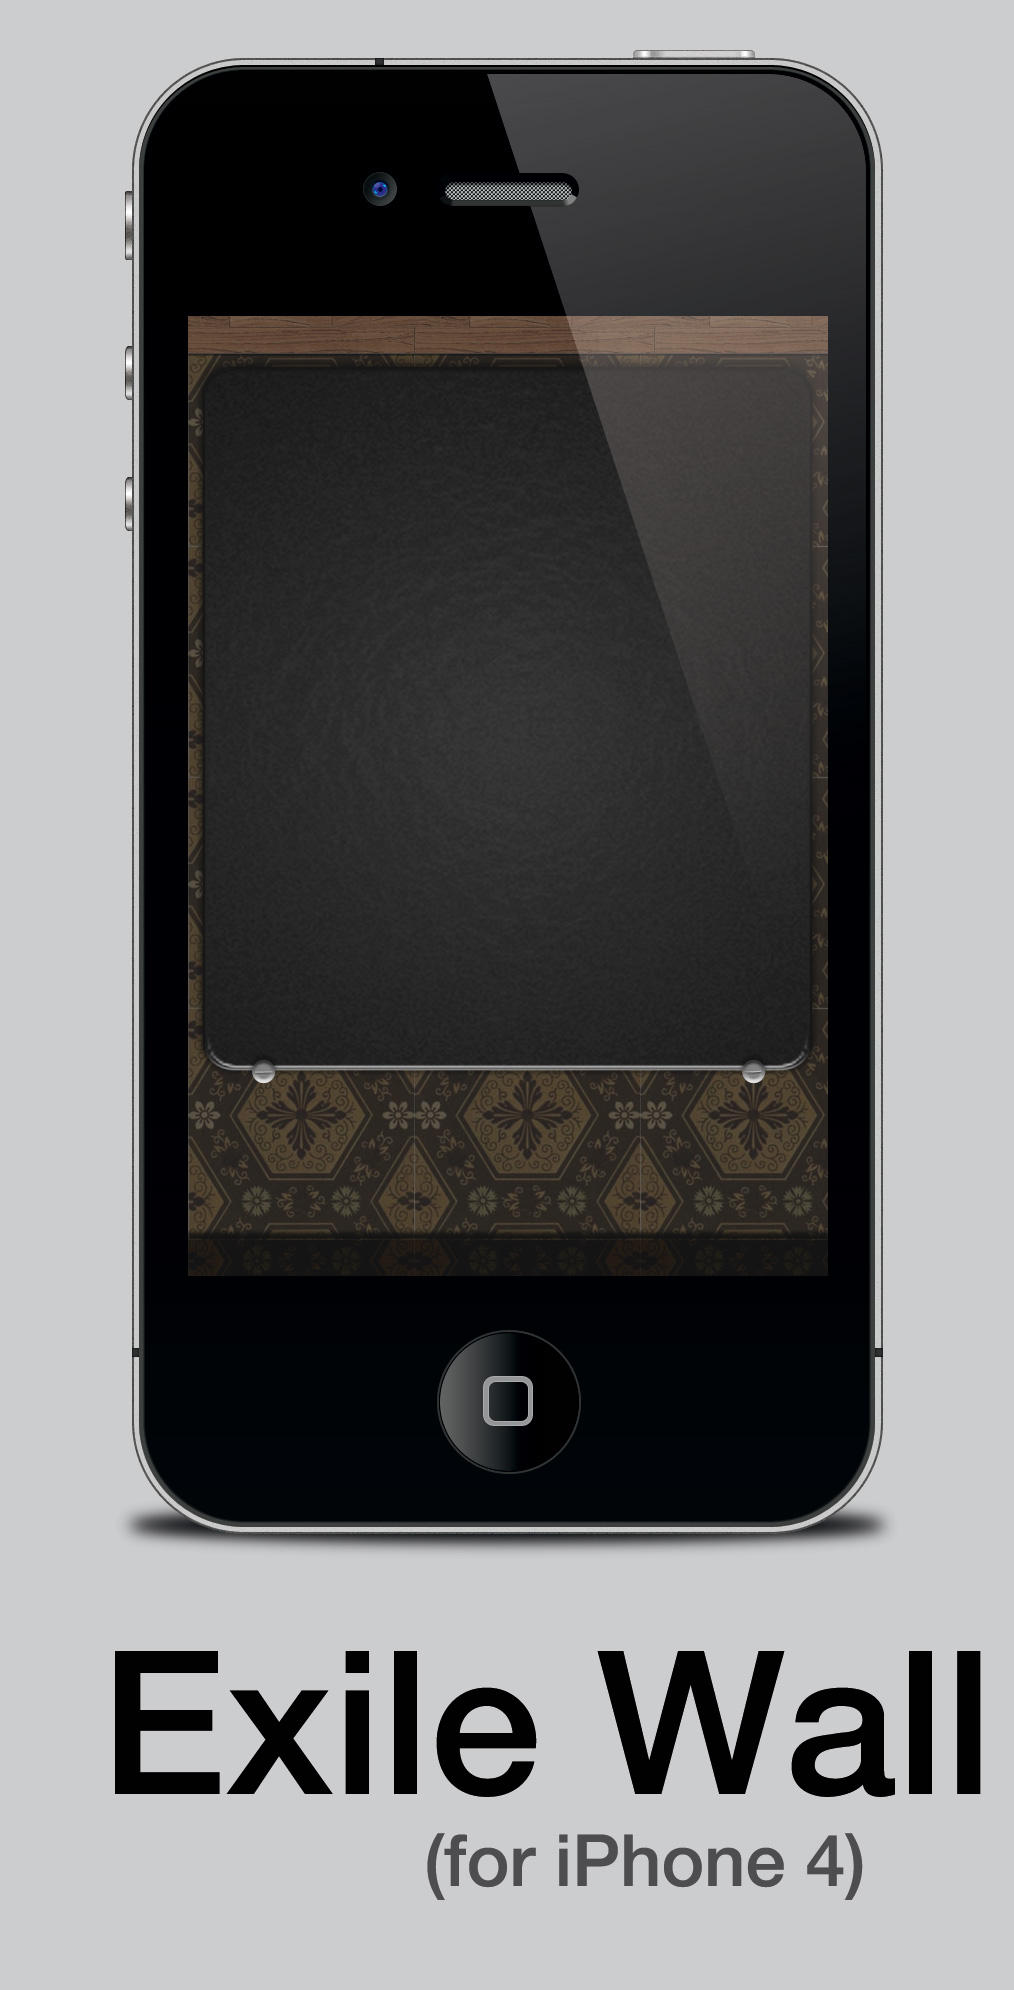 Exile Wallpaper For Iphone 4 By Pattulu シンプルだけどテクスチャが美しすぎるiphone4 4s用 壁紙まとめ Naver まとめ